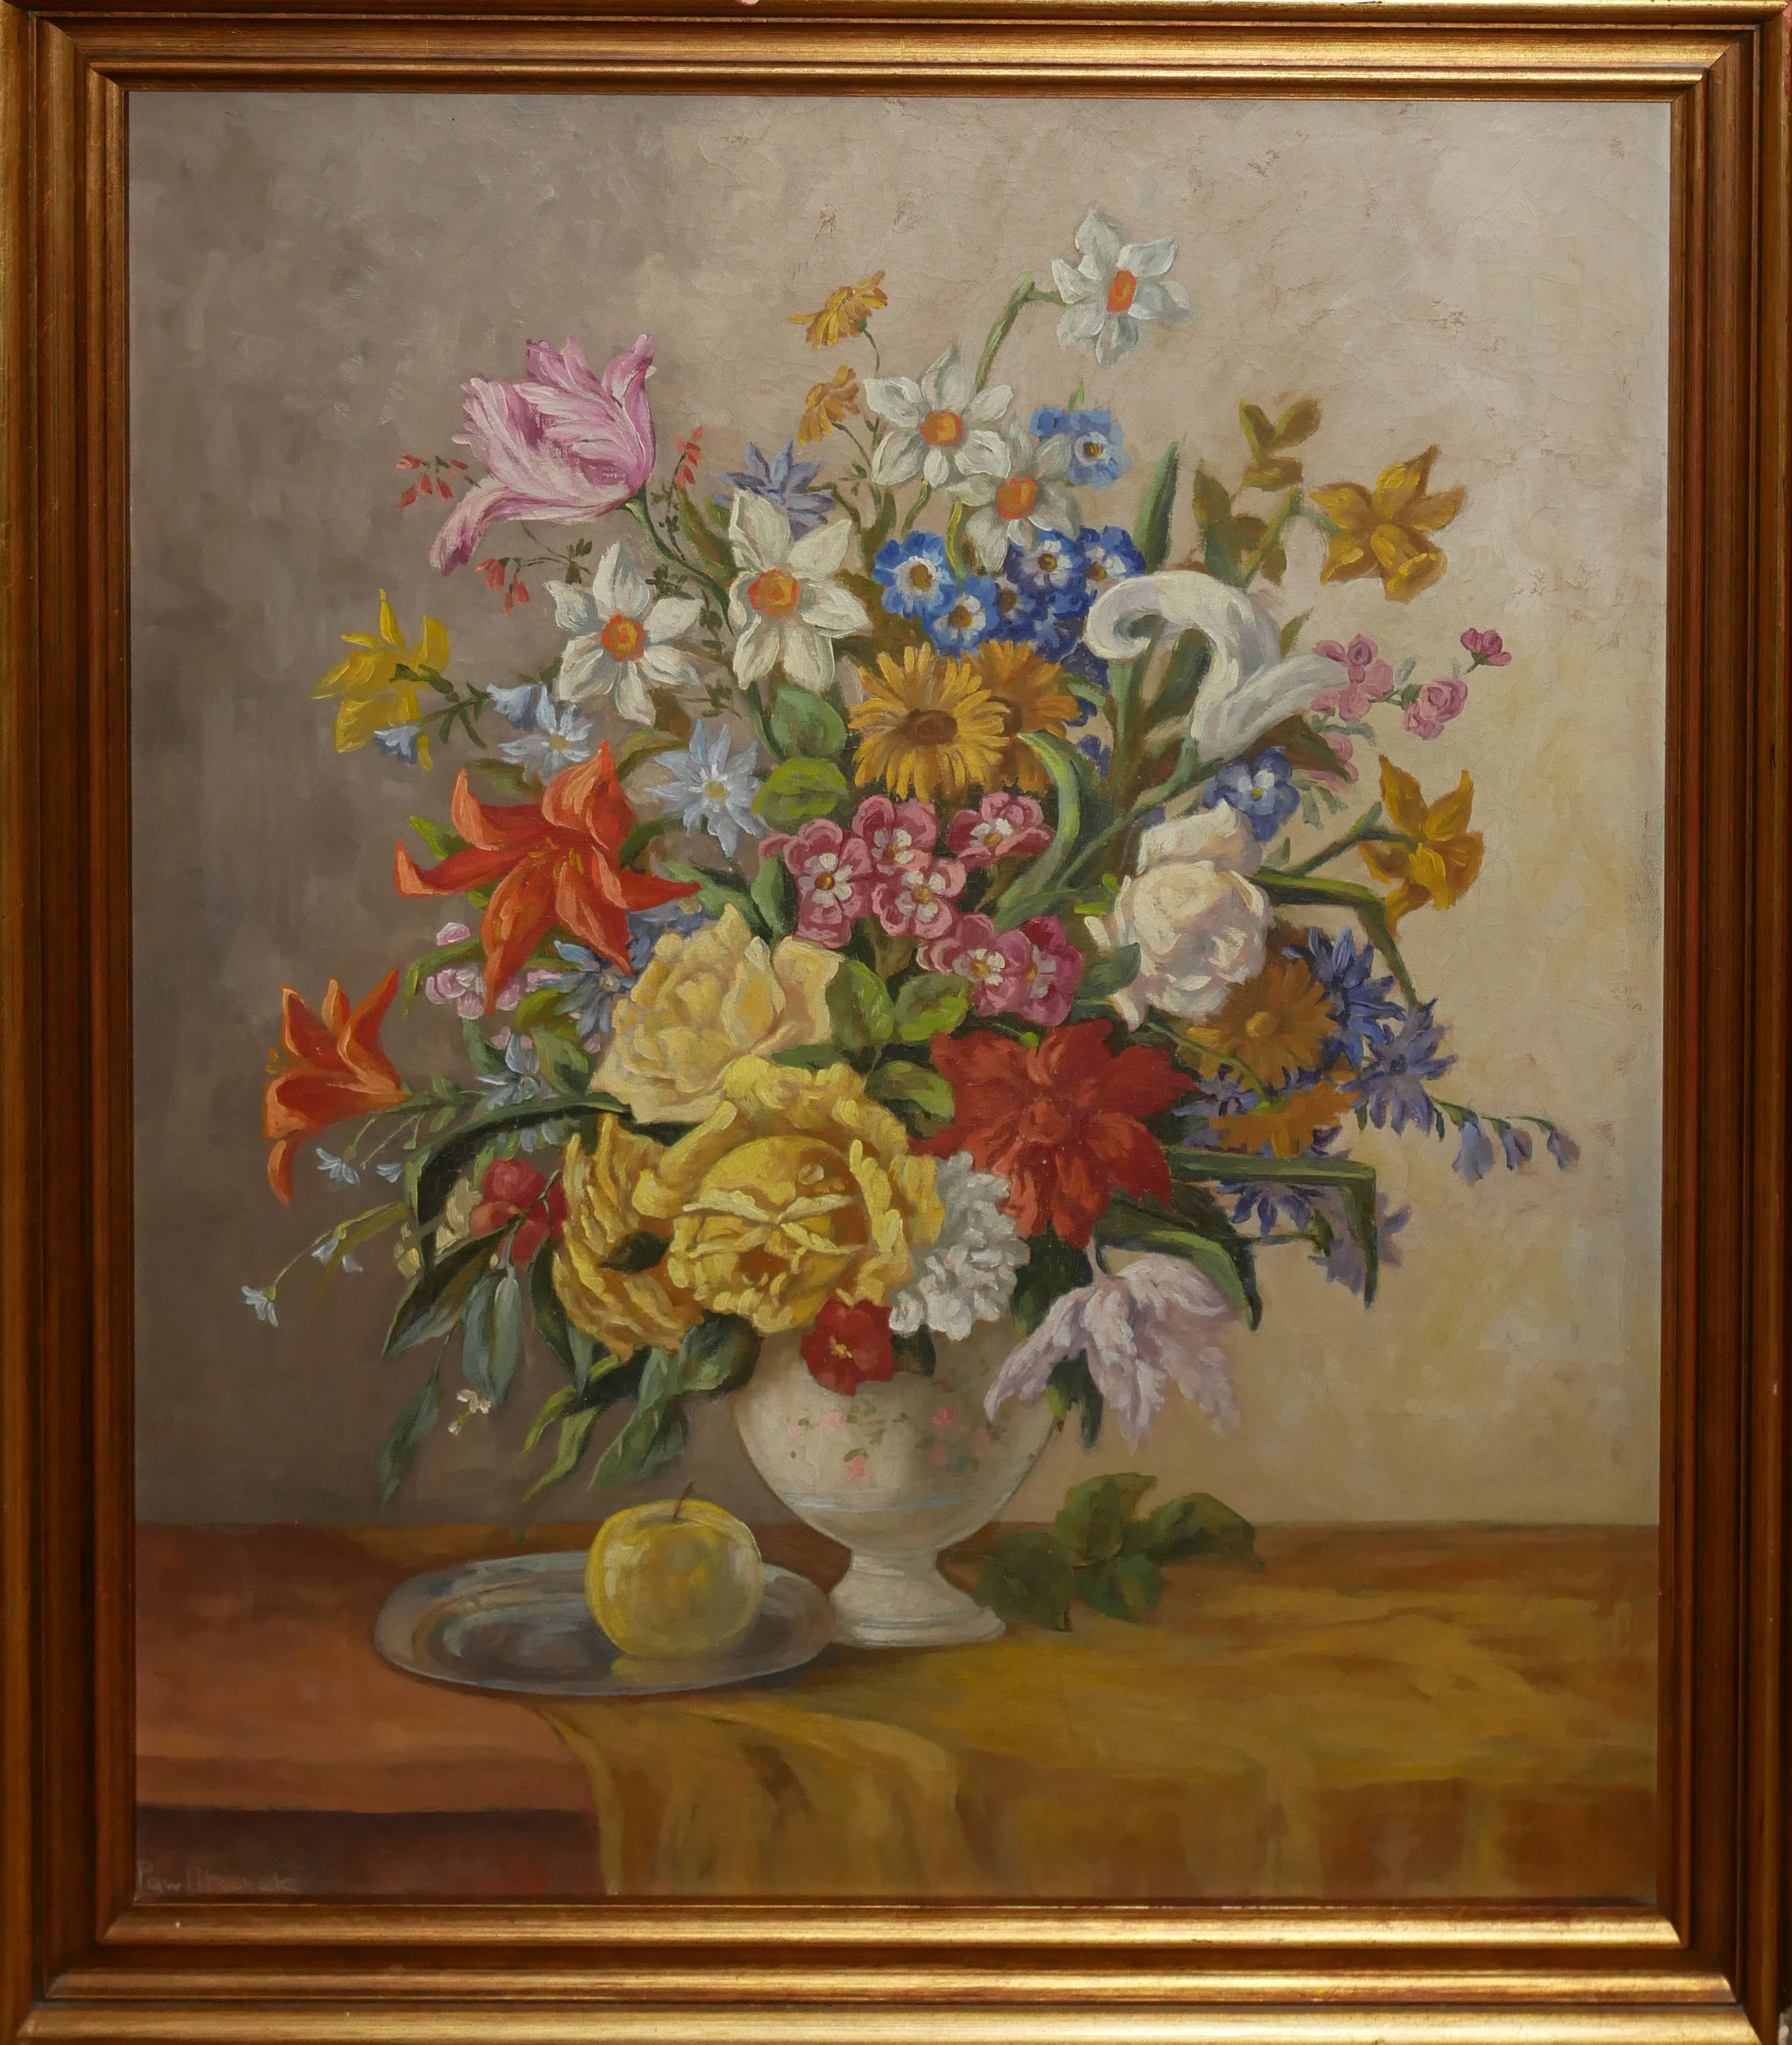 HANS PAWLITSCHEK, AUSTRIAN, 1909 - 1972, 20TH CENTURY OIL ON CANVAS Vase with flowers, signed